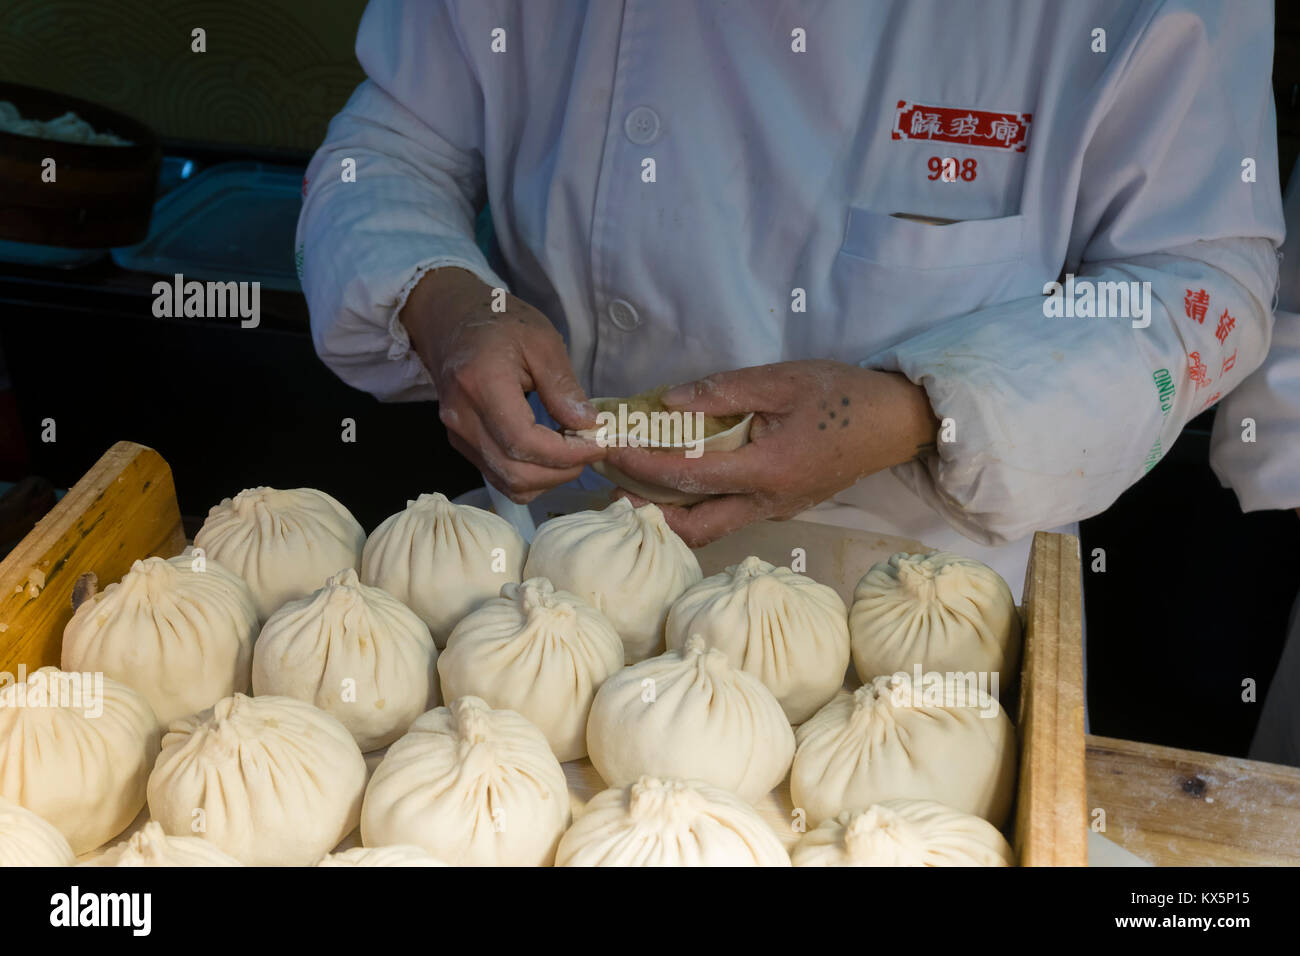 Making Shanghai dumplings Stock Photo